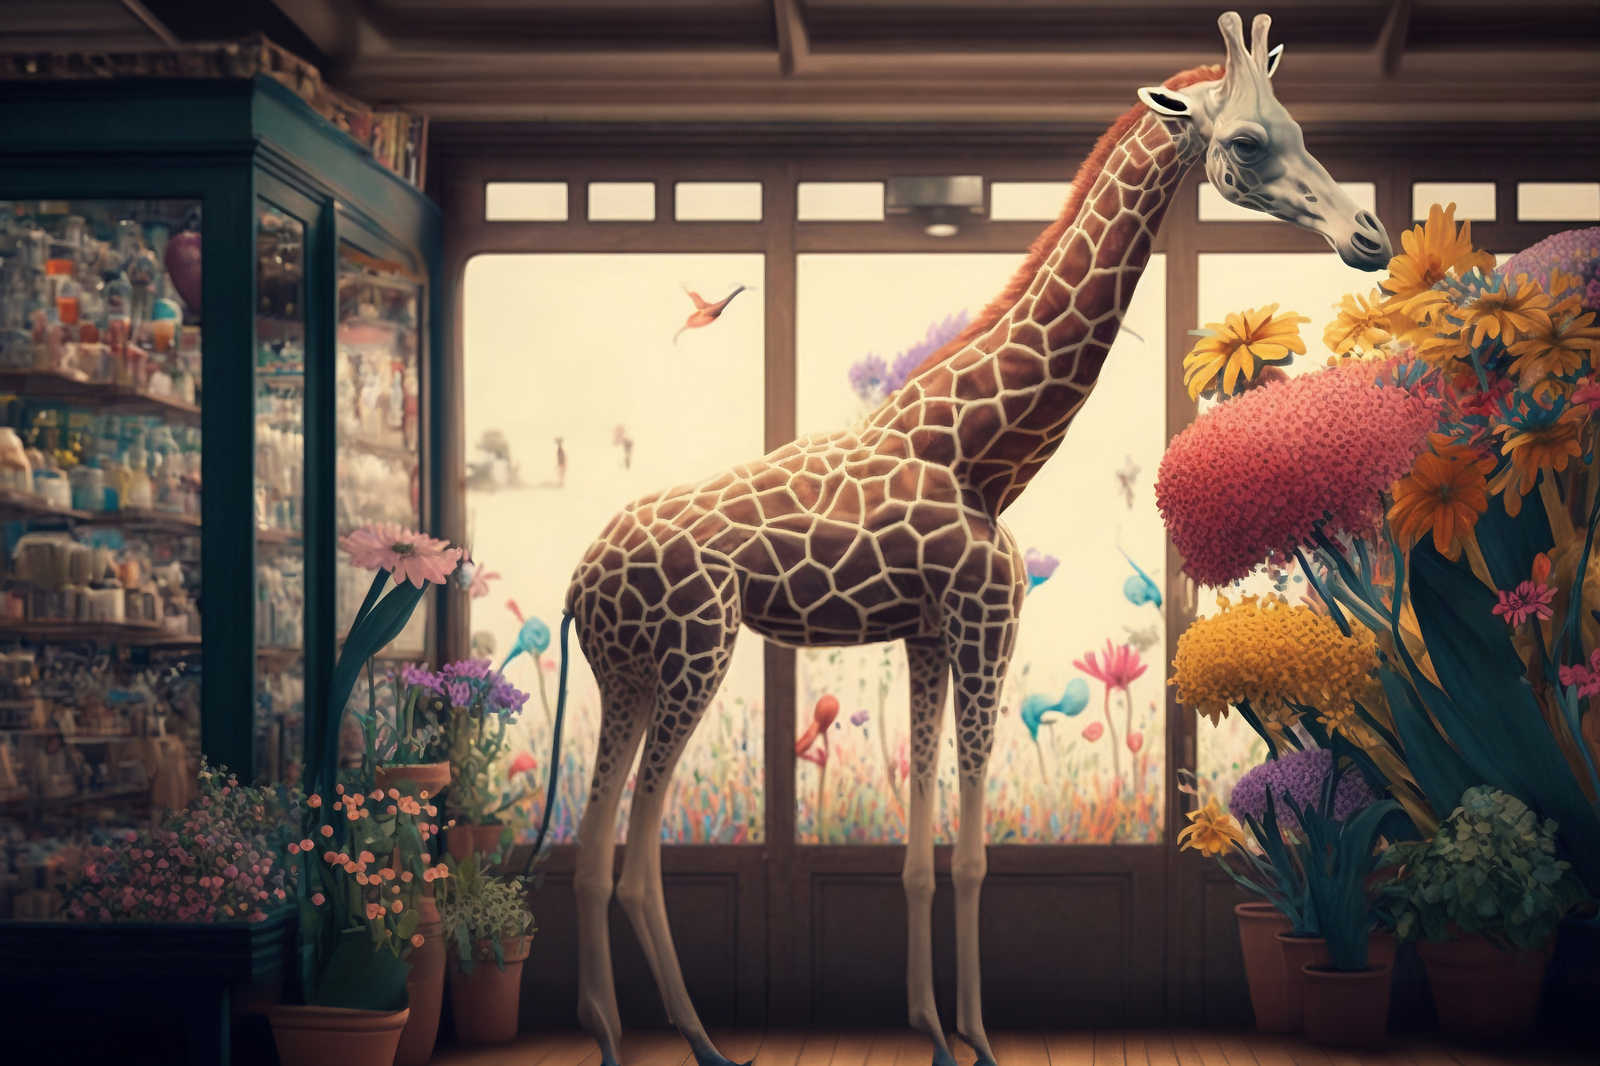             KI Canvas painting »flower giraffe« - 120 cm x 80 cm
        